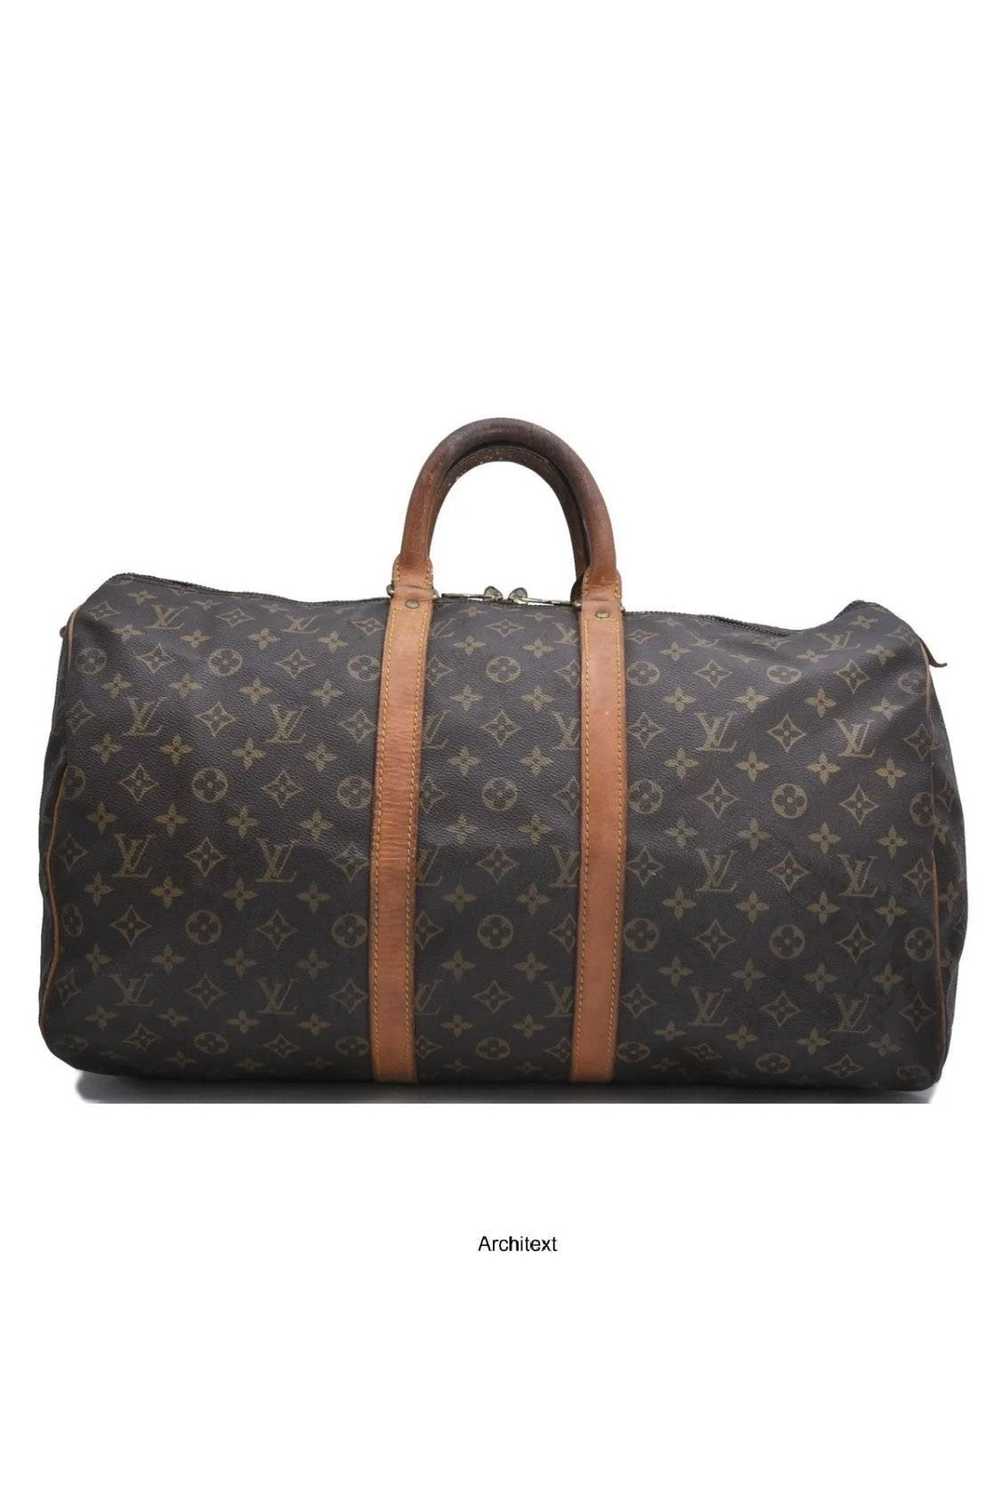 Louis Vuitton Keepall 50 Duffle Bag - image 1